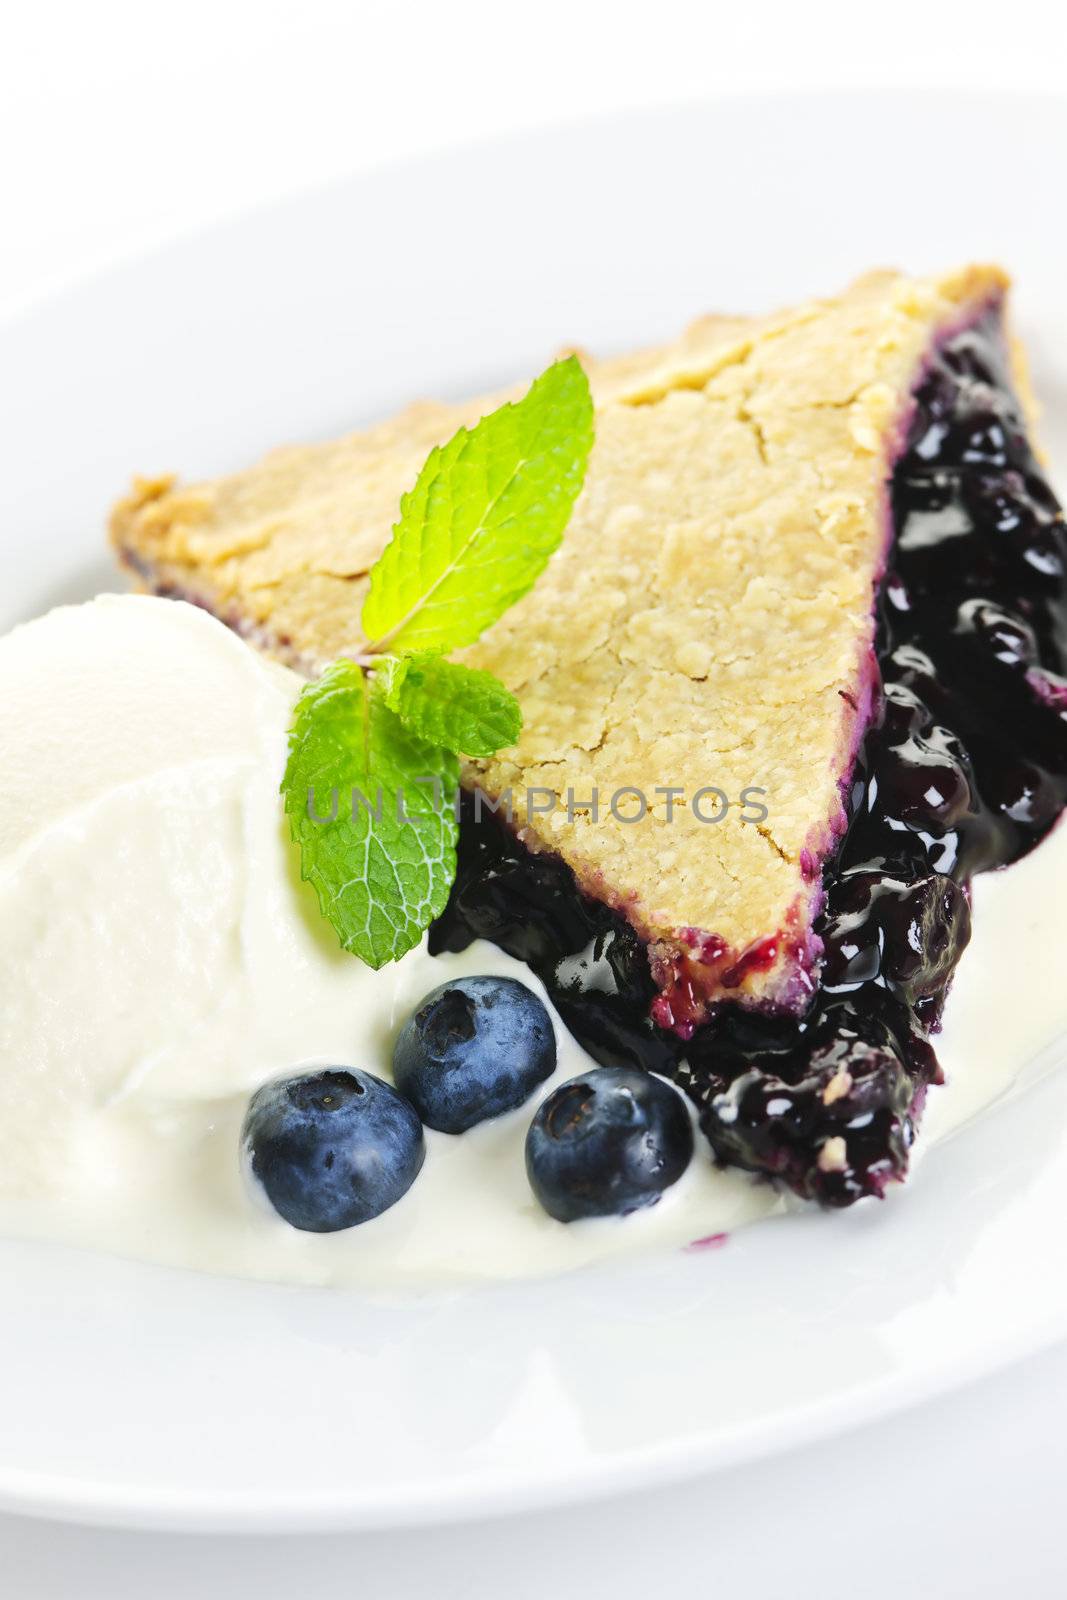 Blueberry pie slice by elenathewise